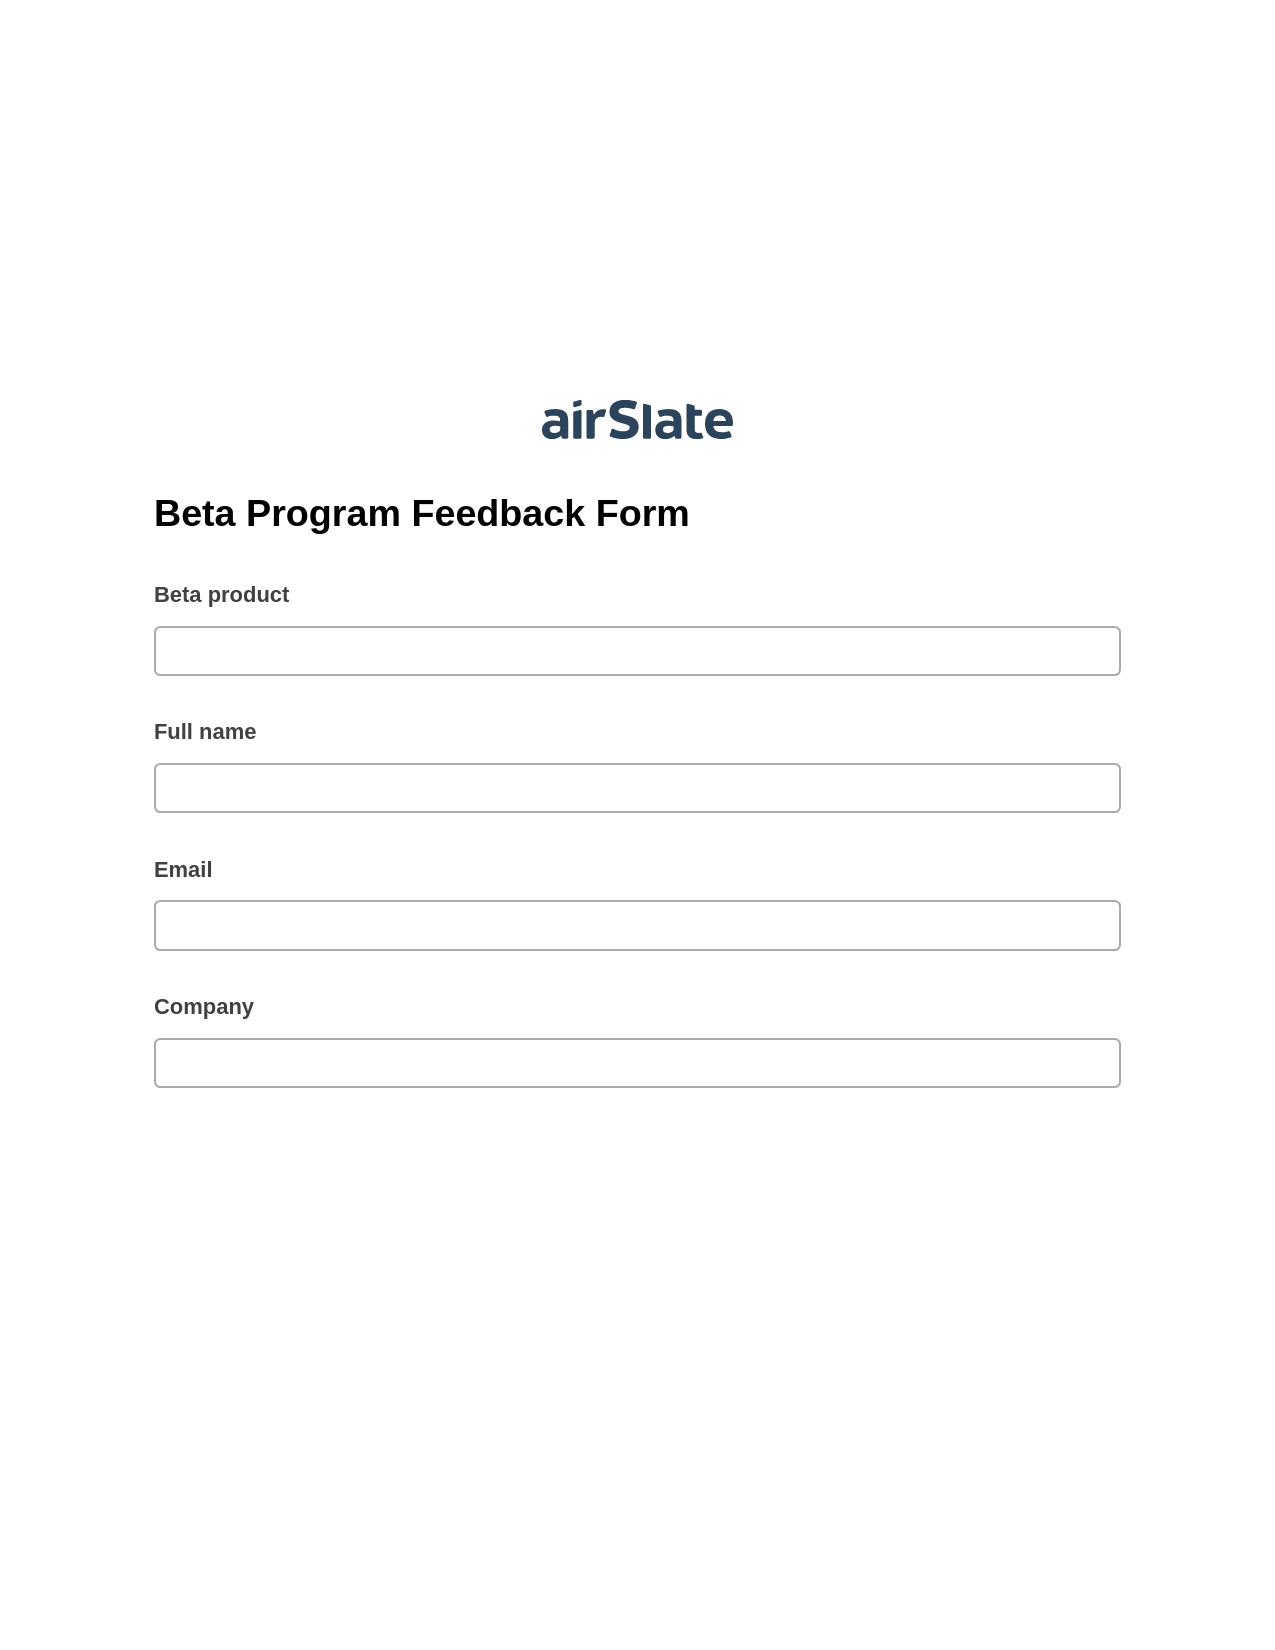 Beta Program Feedback Form Pre-fill Document Bot, Assign Slate Name Bot, Archive to SharePoint Folder Bot